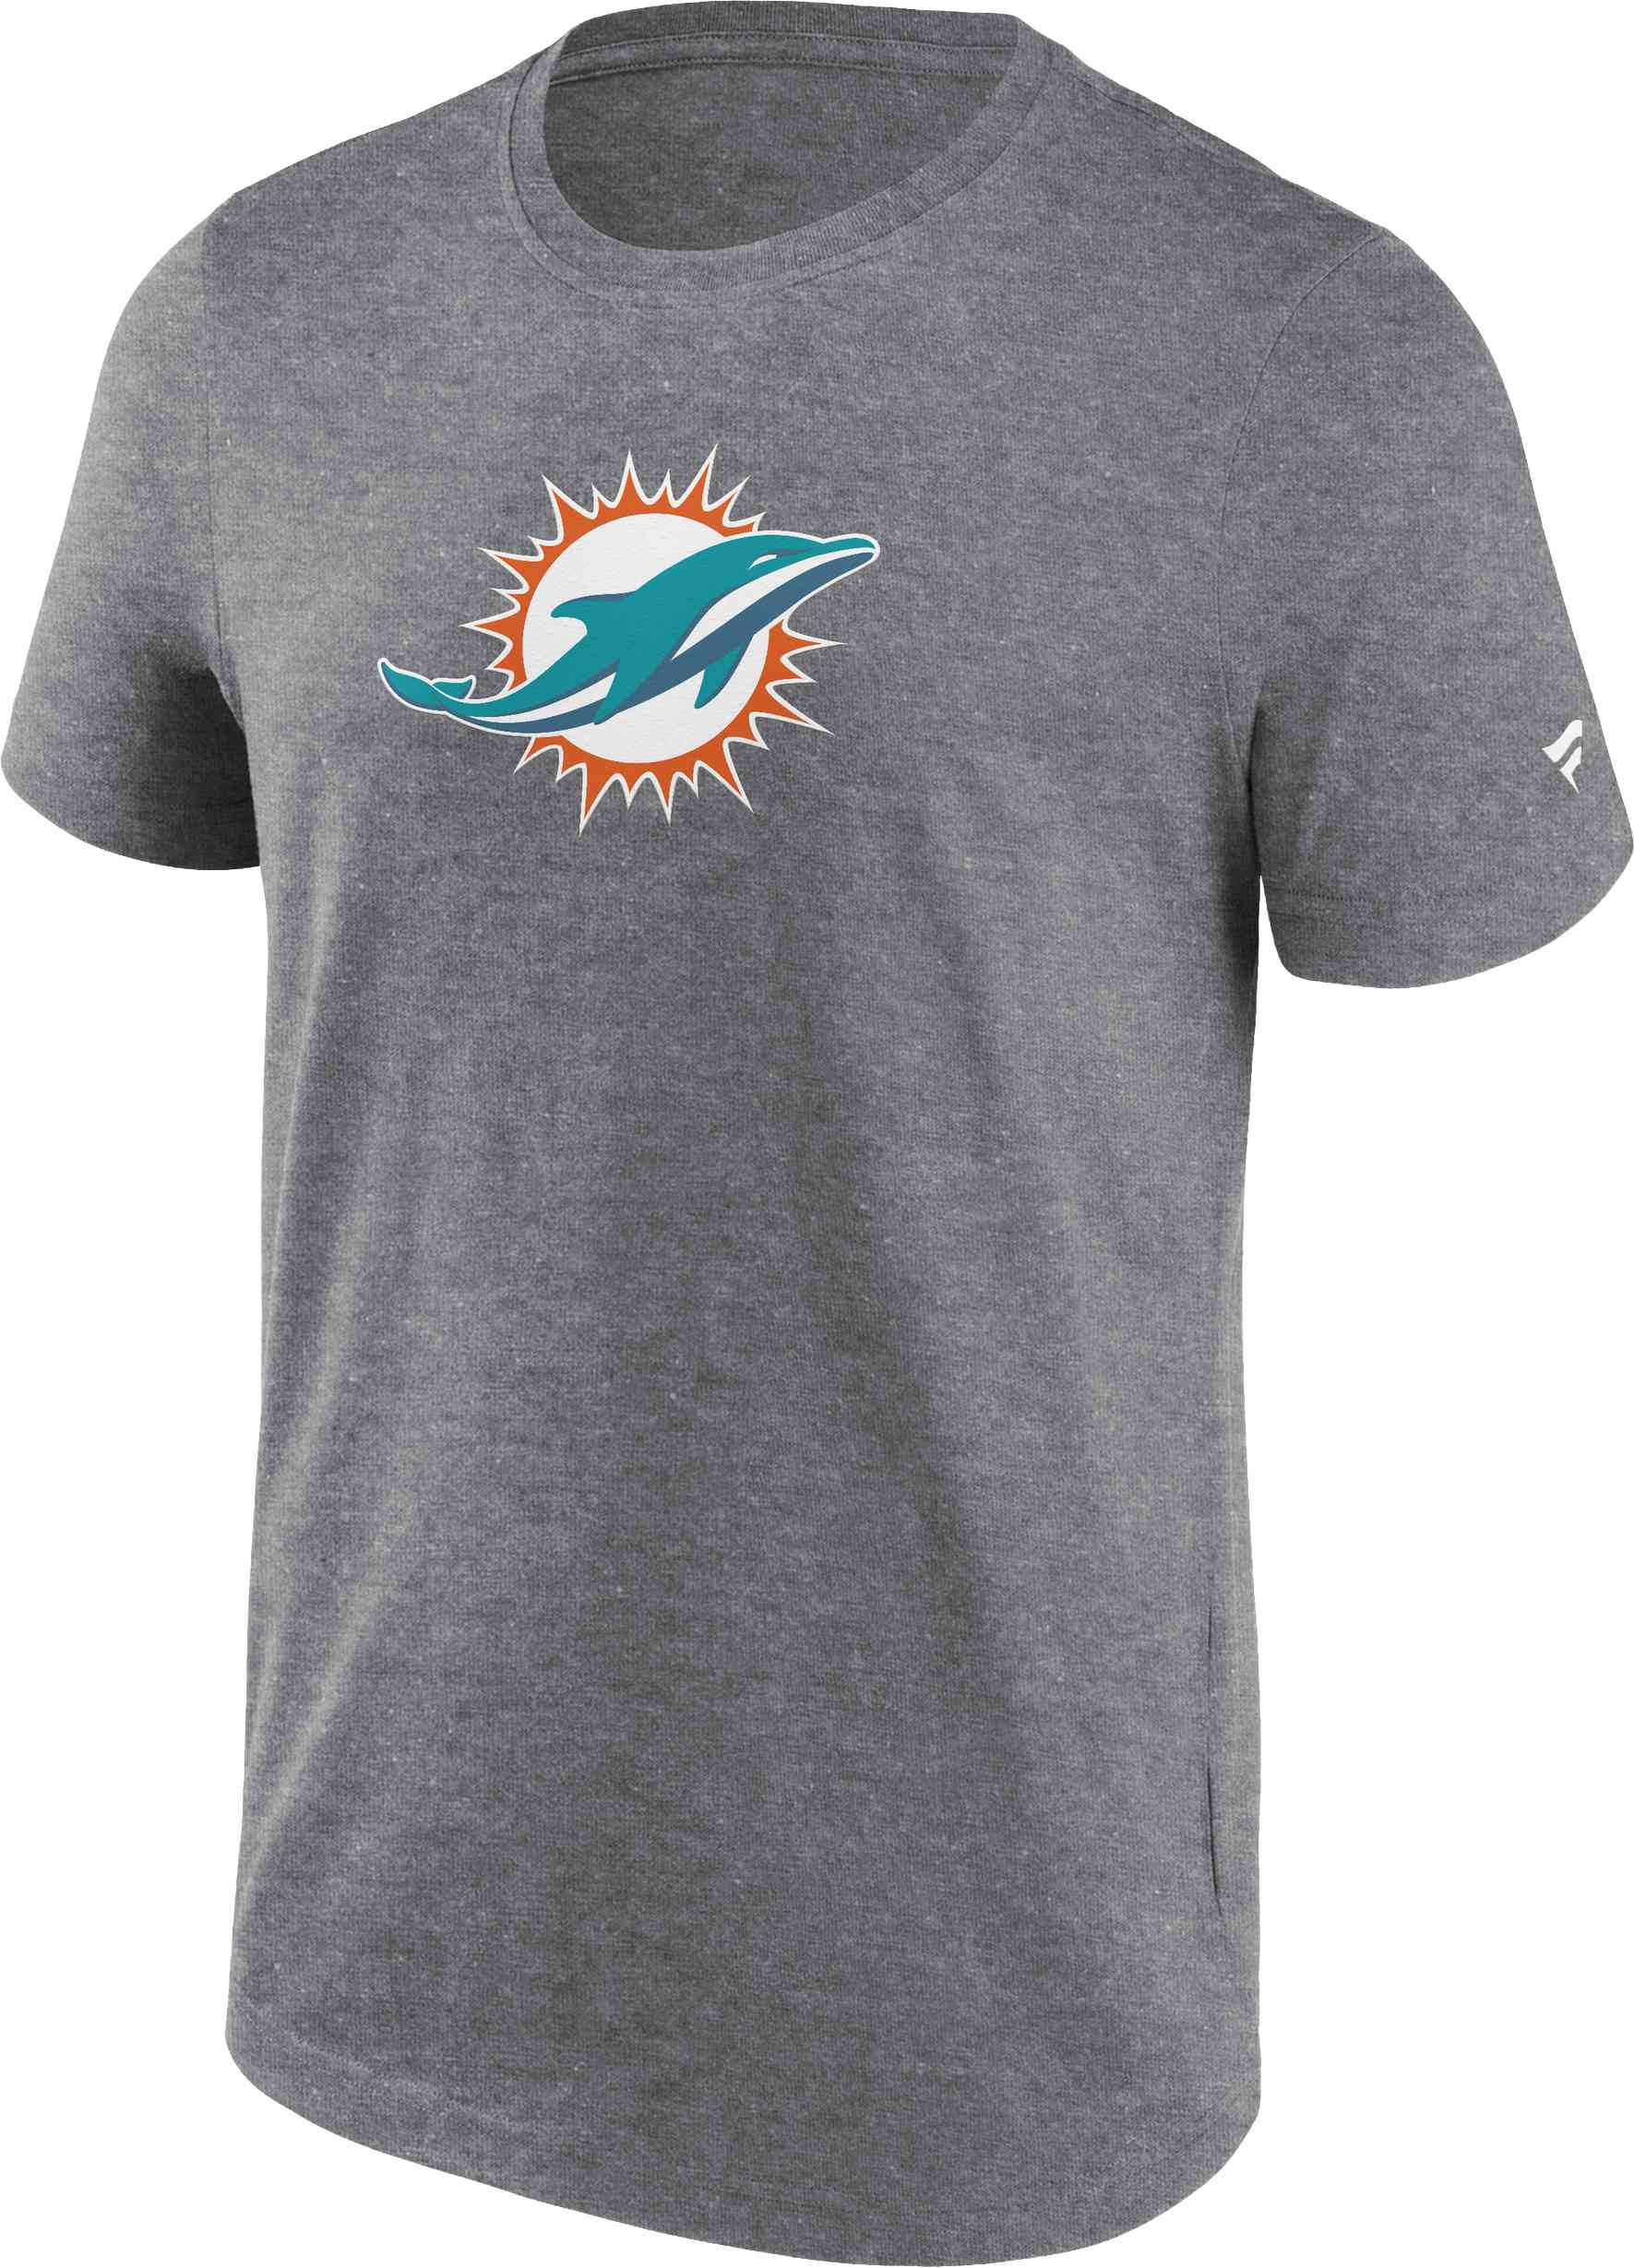 Fanatics - NFL Miami Dolphins Primary Logo Graphic T-Shirt